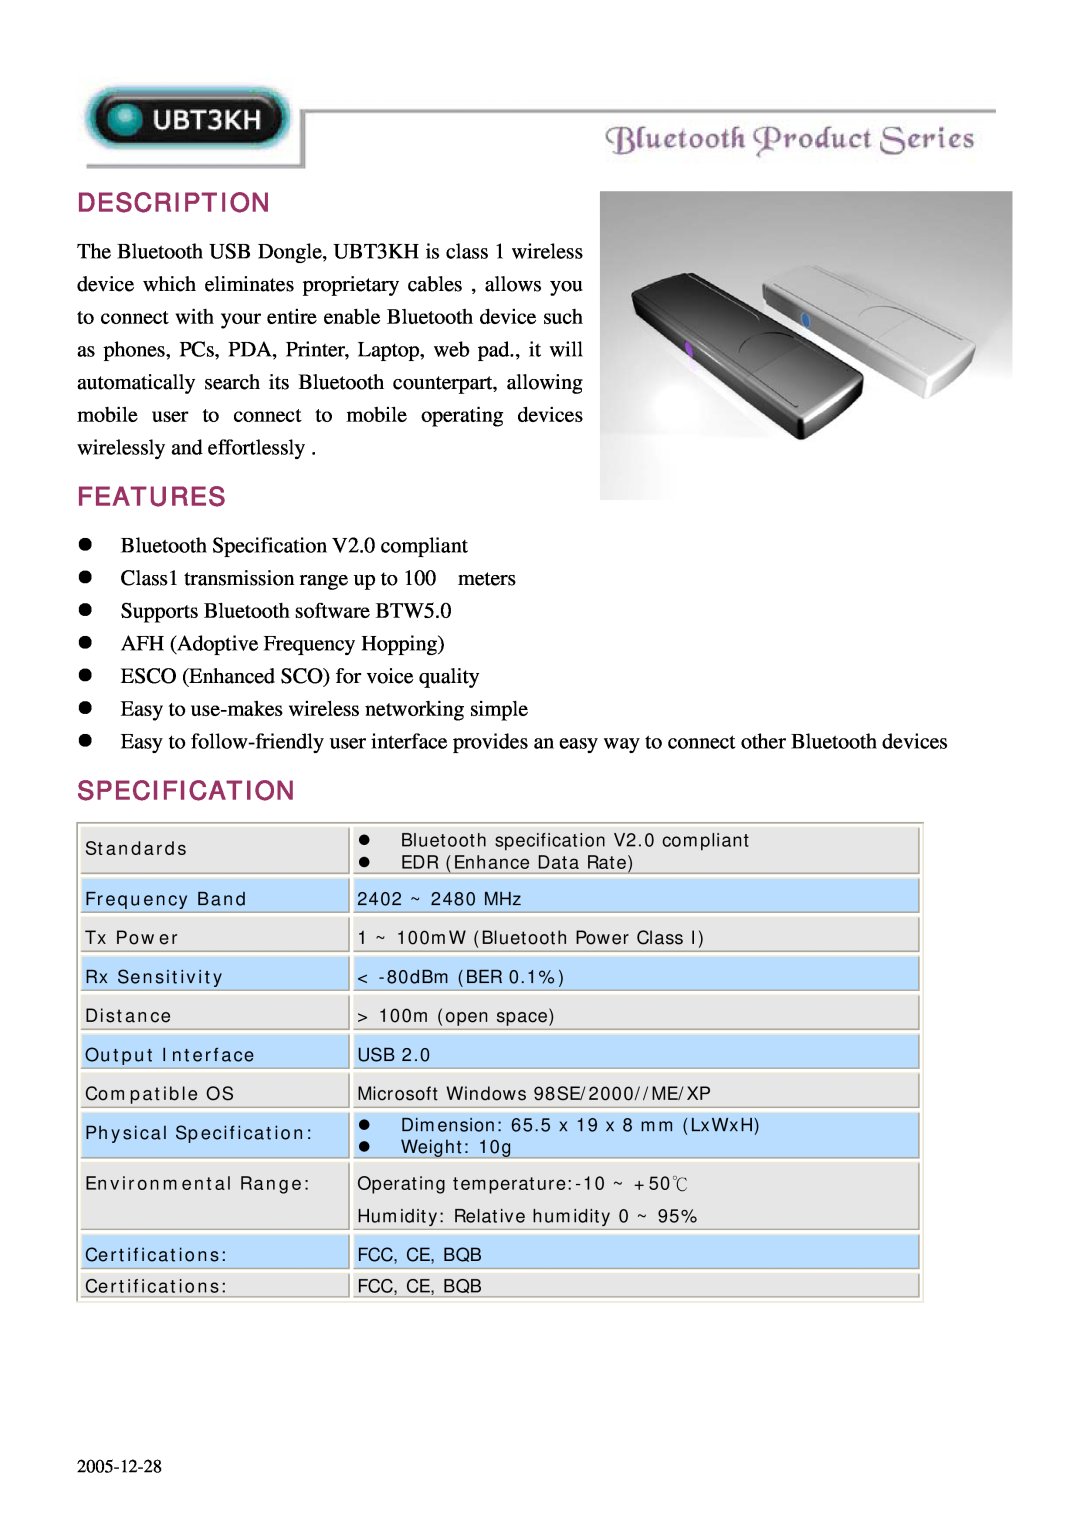 Abocom UBT3KH specifications Description, Features, Specification 